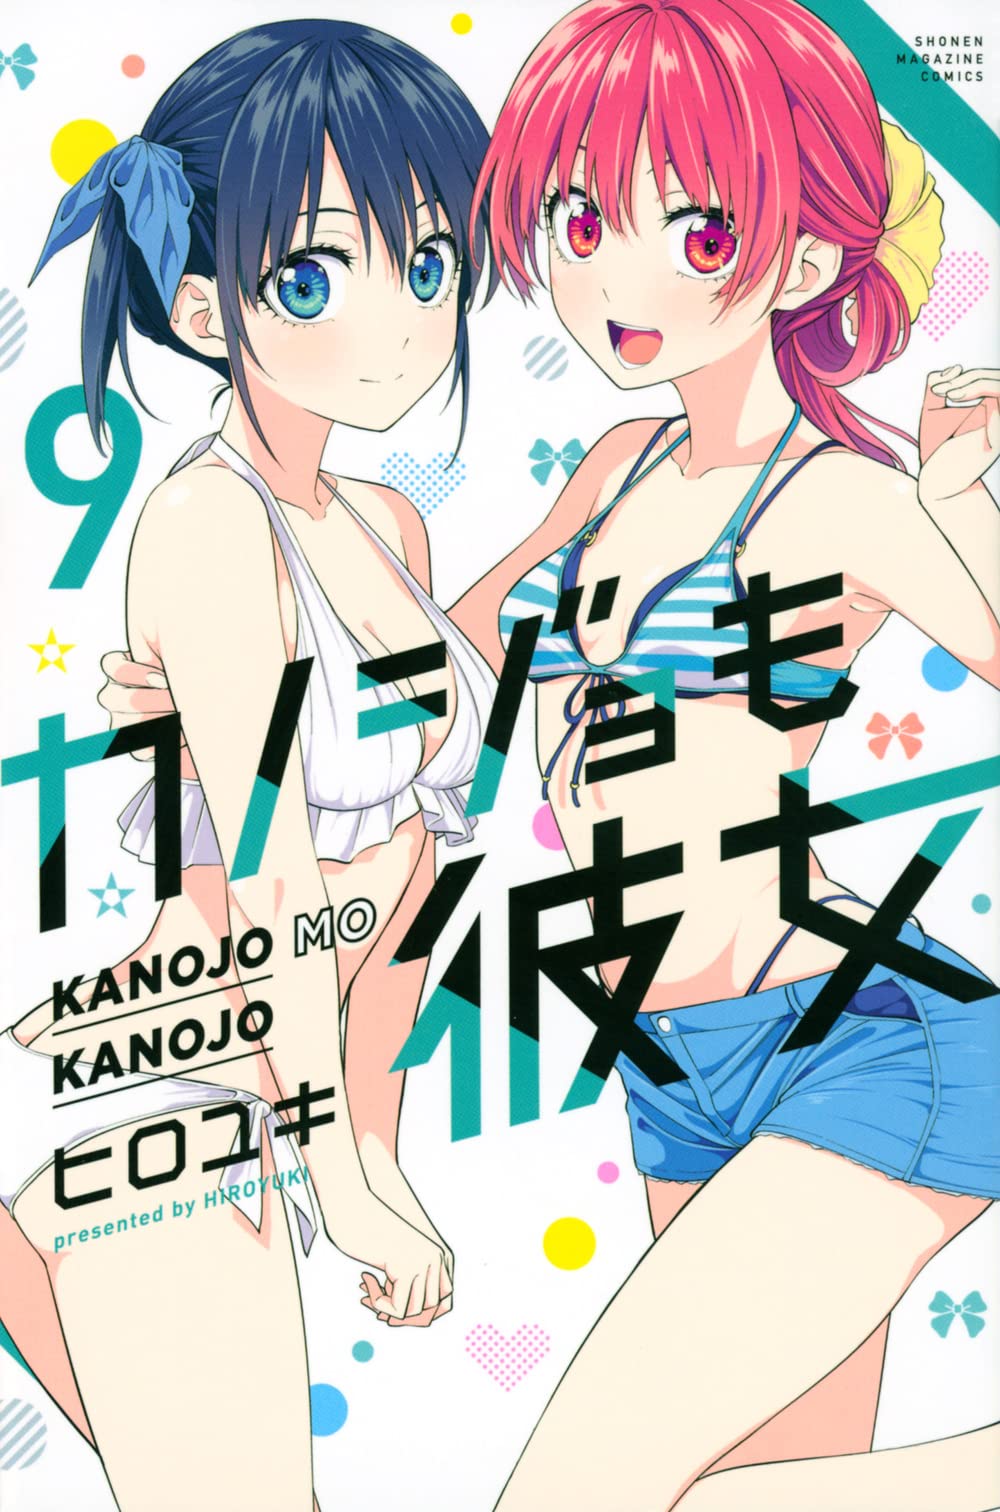 Kanojo mo Kanojo - KanoKano - Girlfriend, Girlfriend.